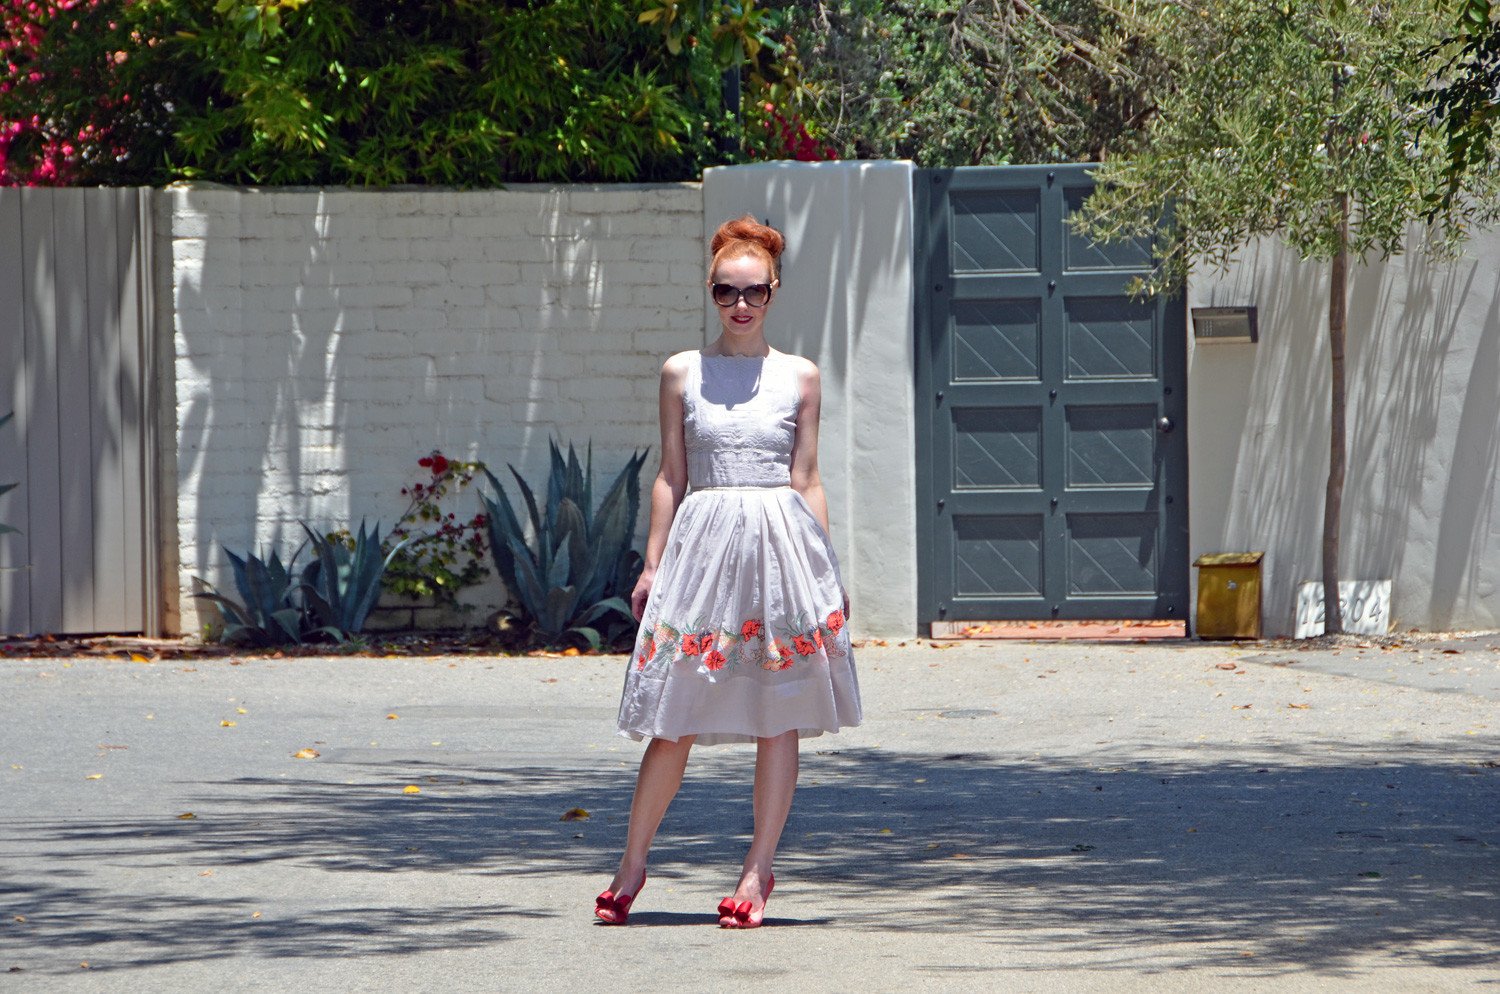 Outside Marilyn Monroe's house in Los Angeles, California